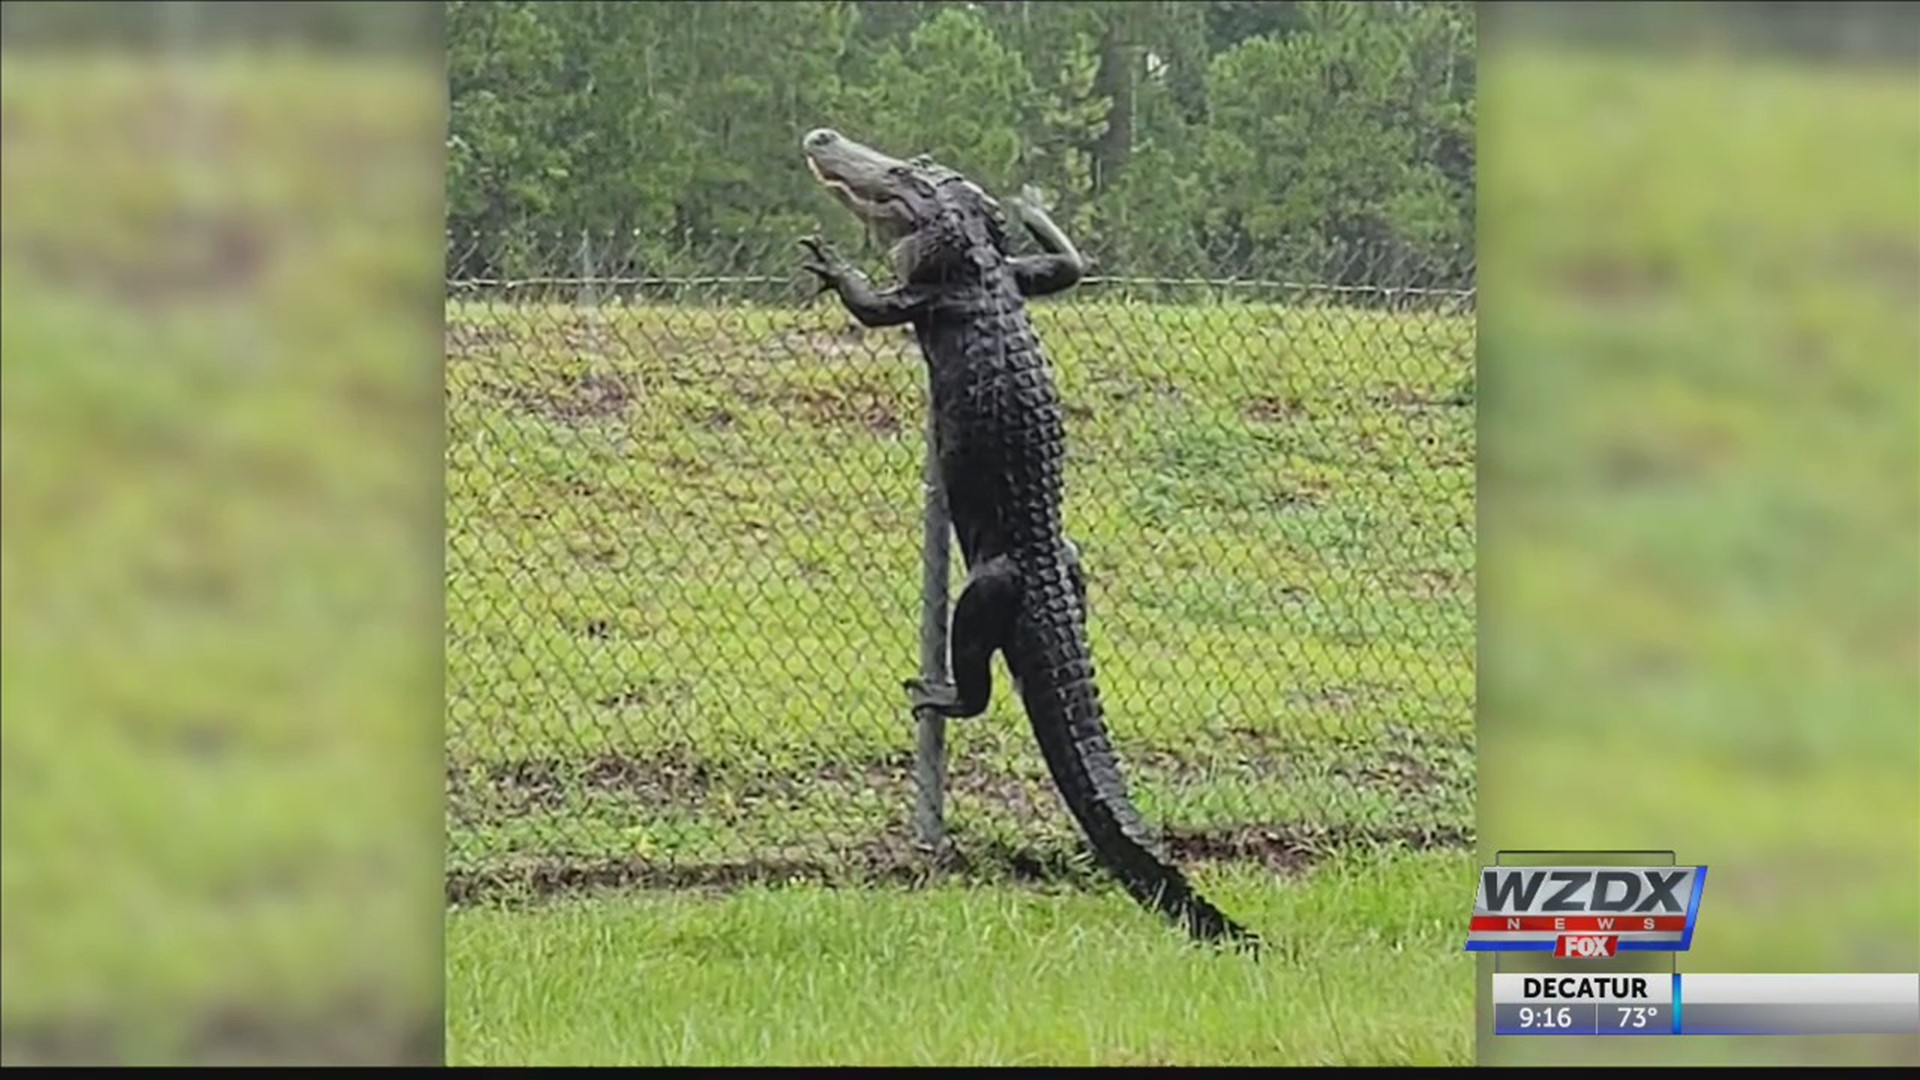 Apparently, Alligators can climb fences!